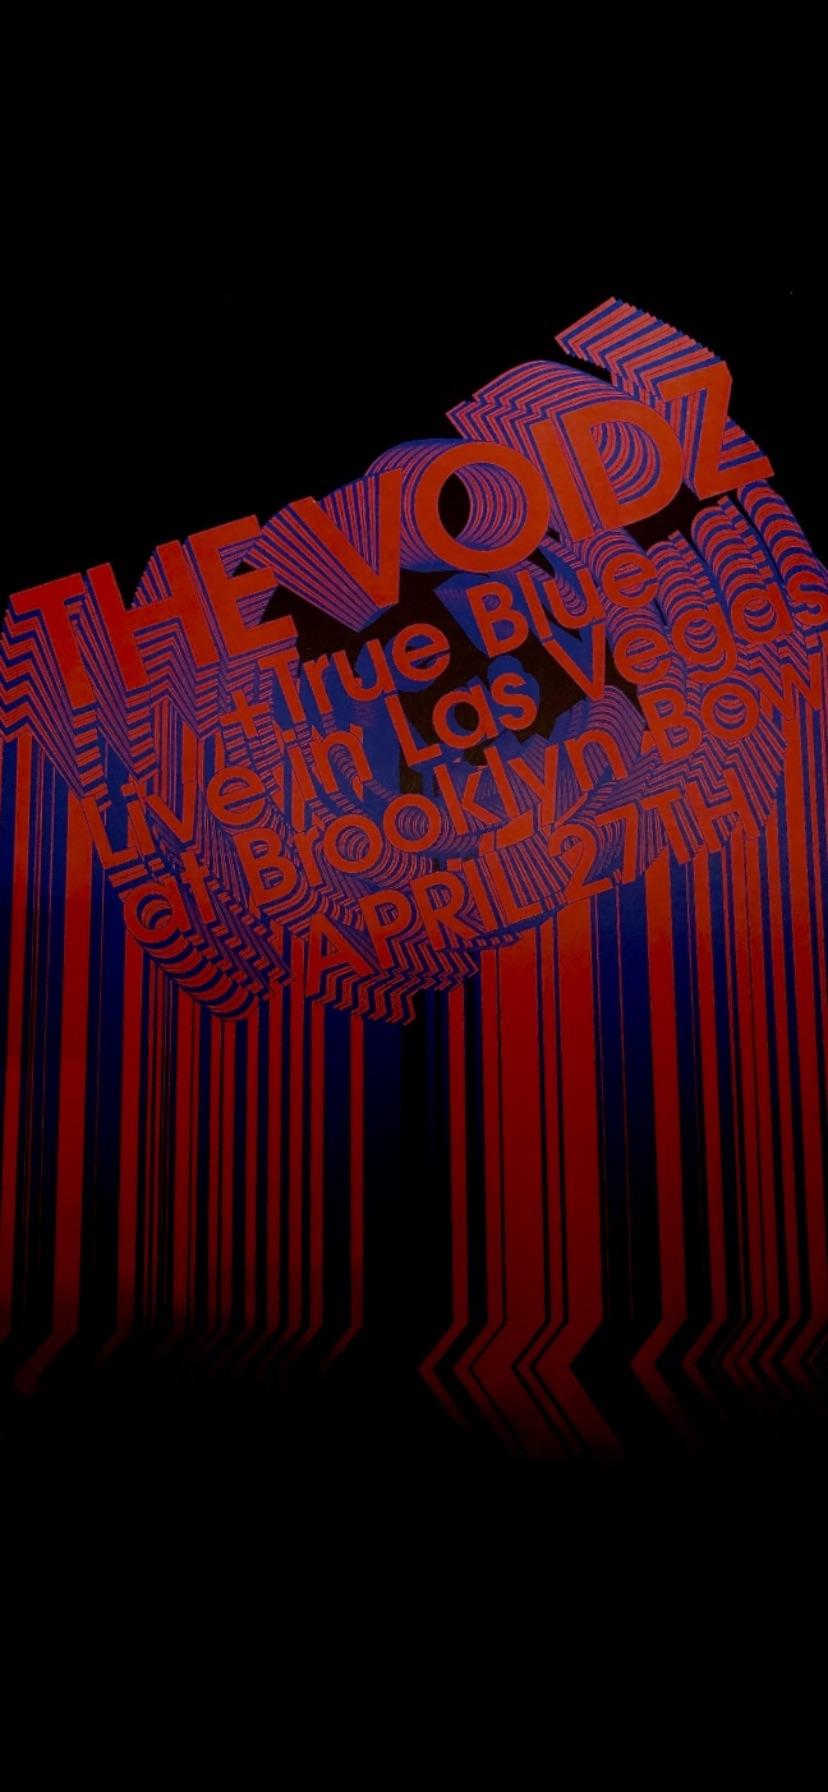 Made that las vegas voidz poster into an iphone wallpaper, enjoy!